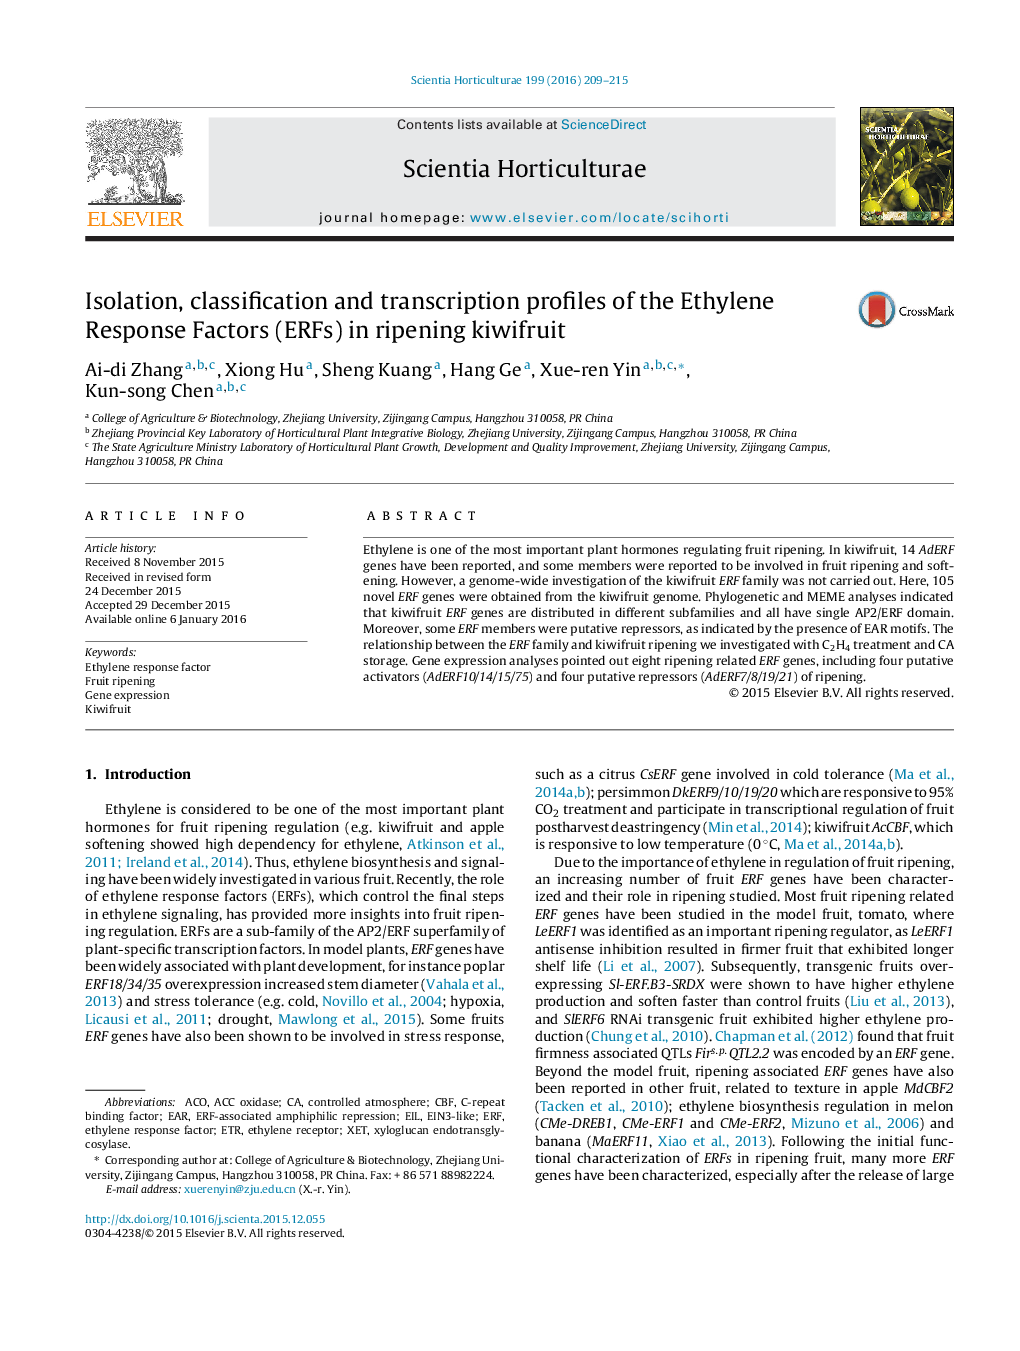 Isolation, classification and transcription profiles of the Ethylene Response Factors (ERFs) in ripening kiwifruit